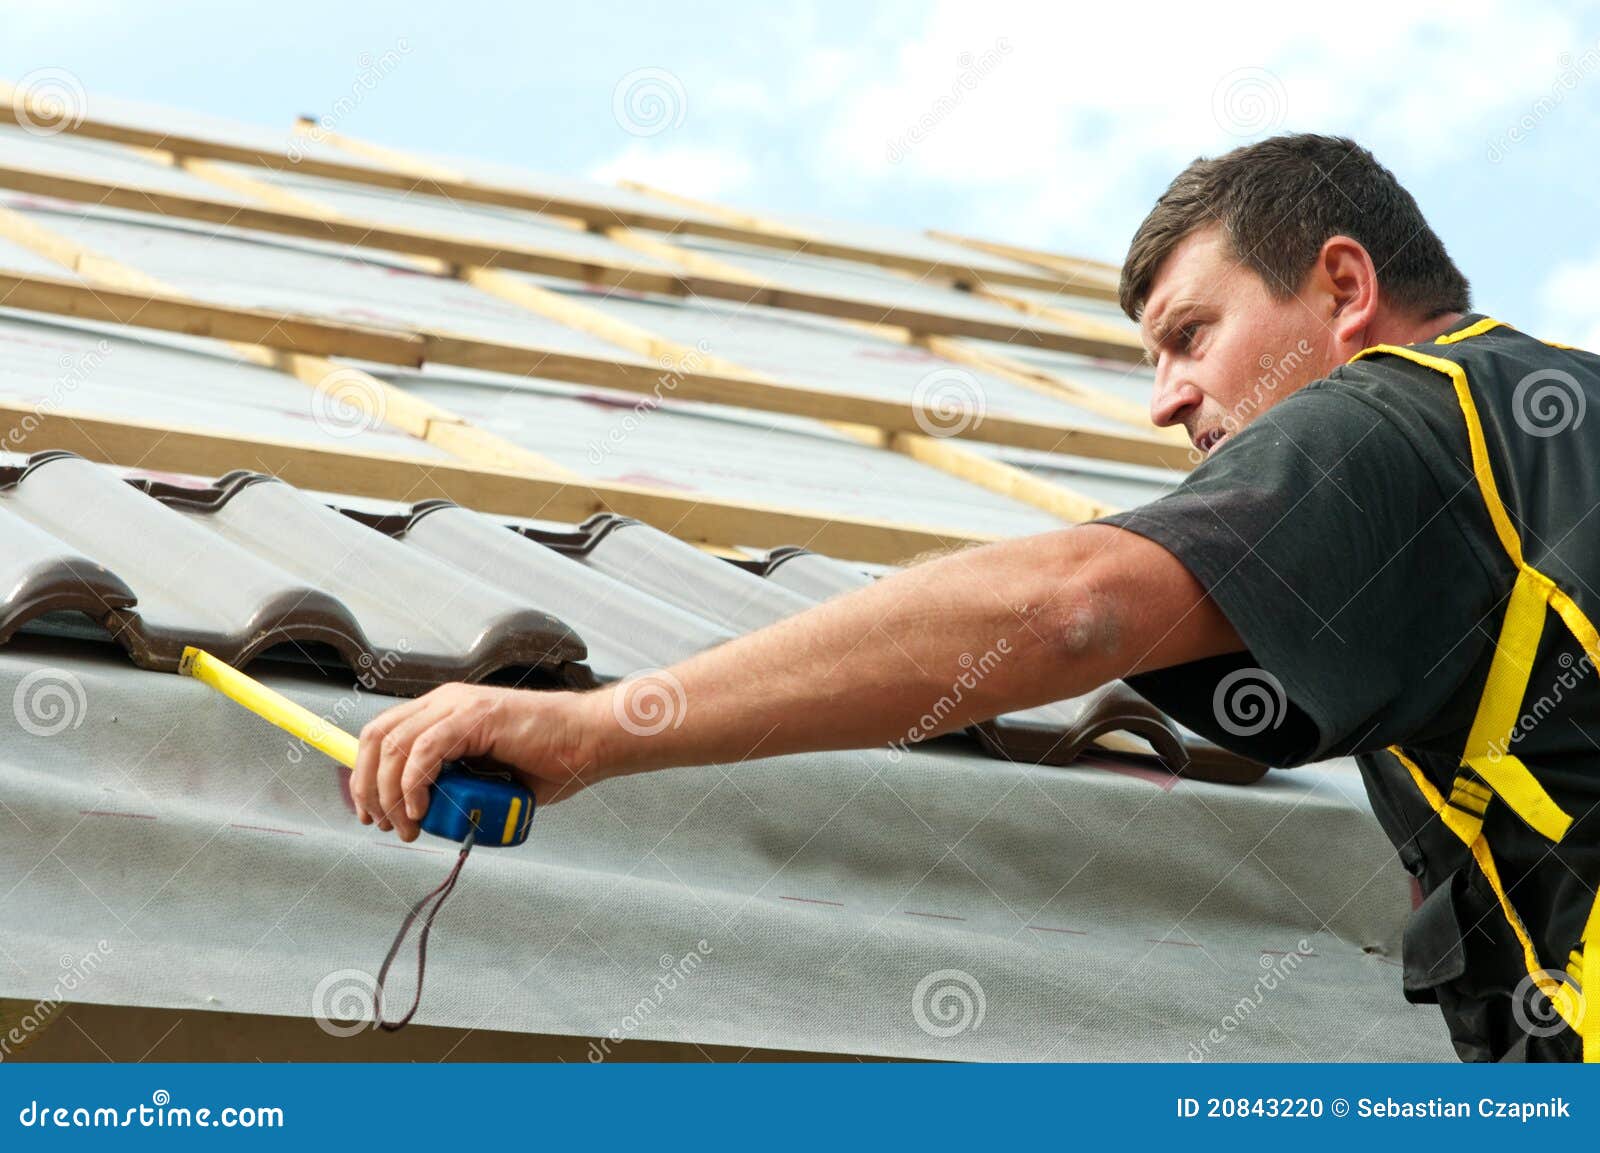 workman tiling roof